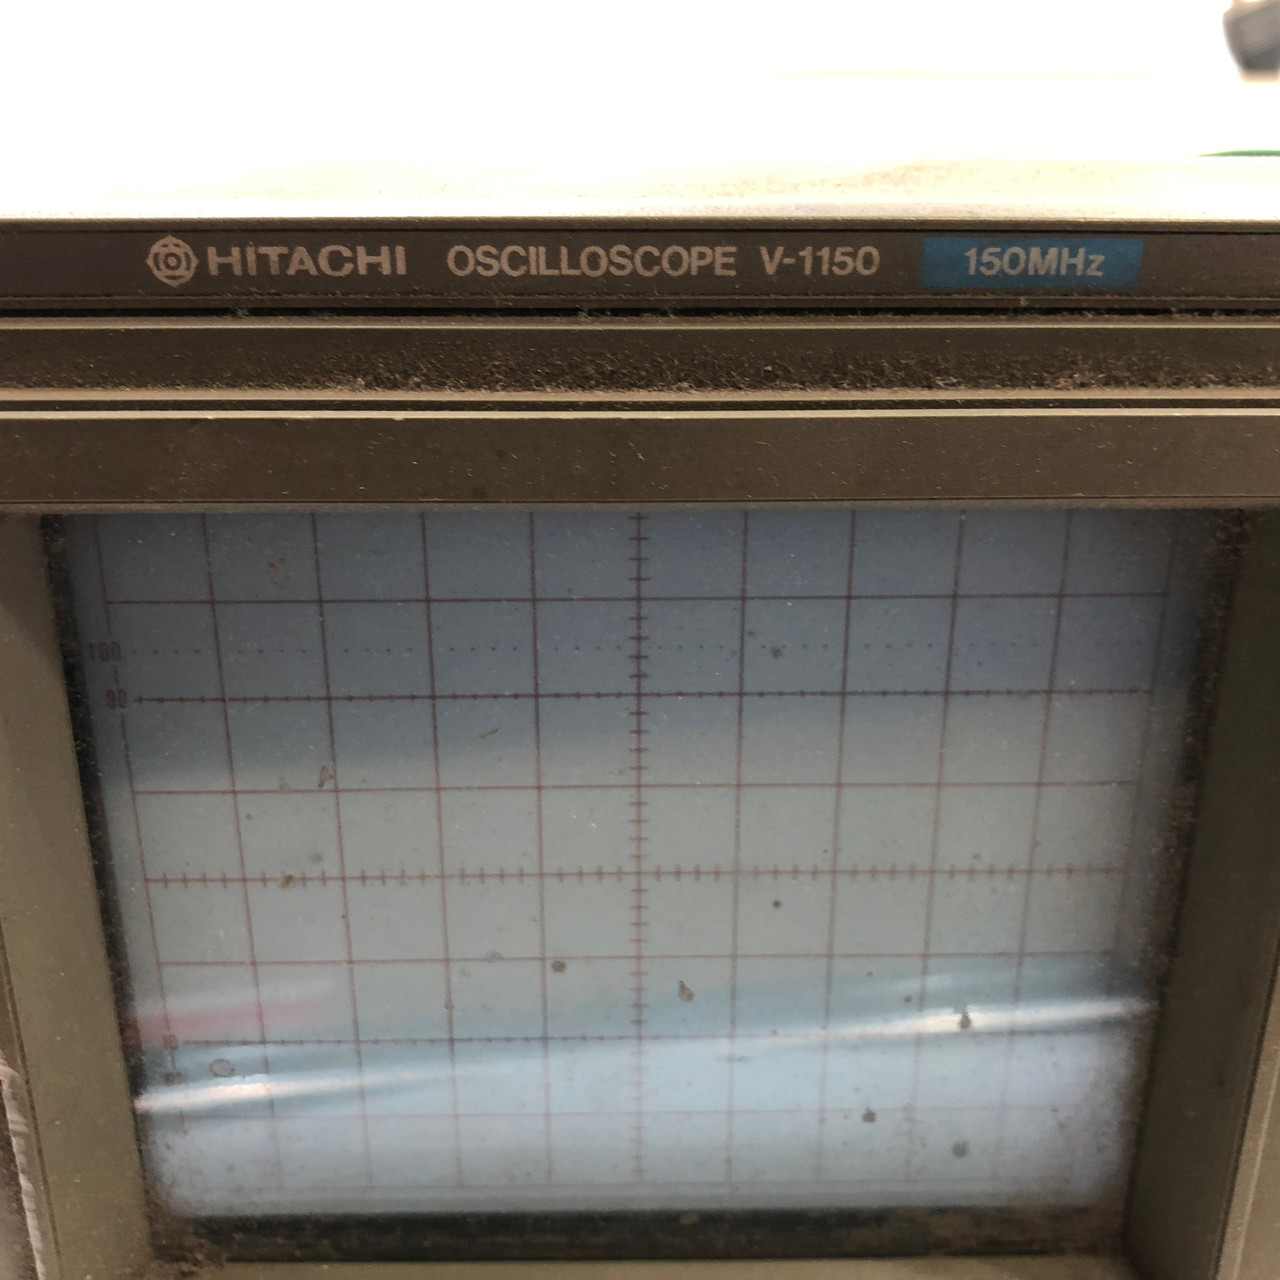 HITACHI V-1150 ANALOG OSCILLOSCOPE 150MHZ - POWER TESTED READ